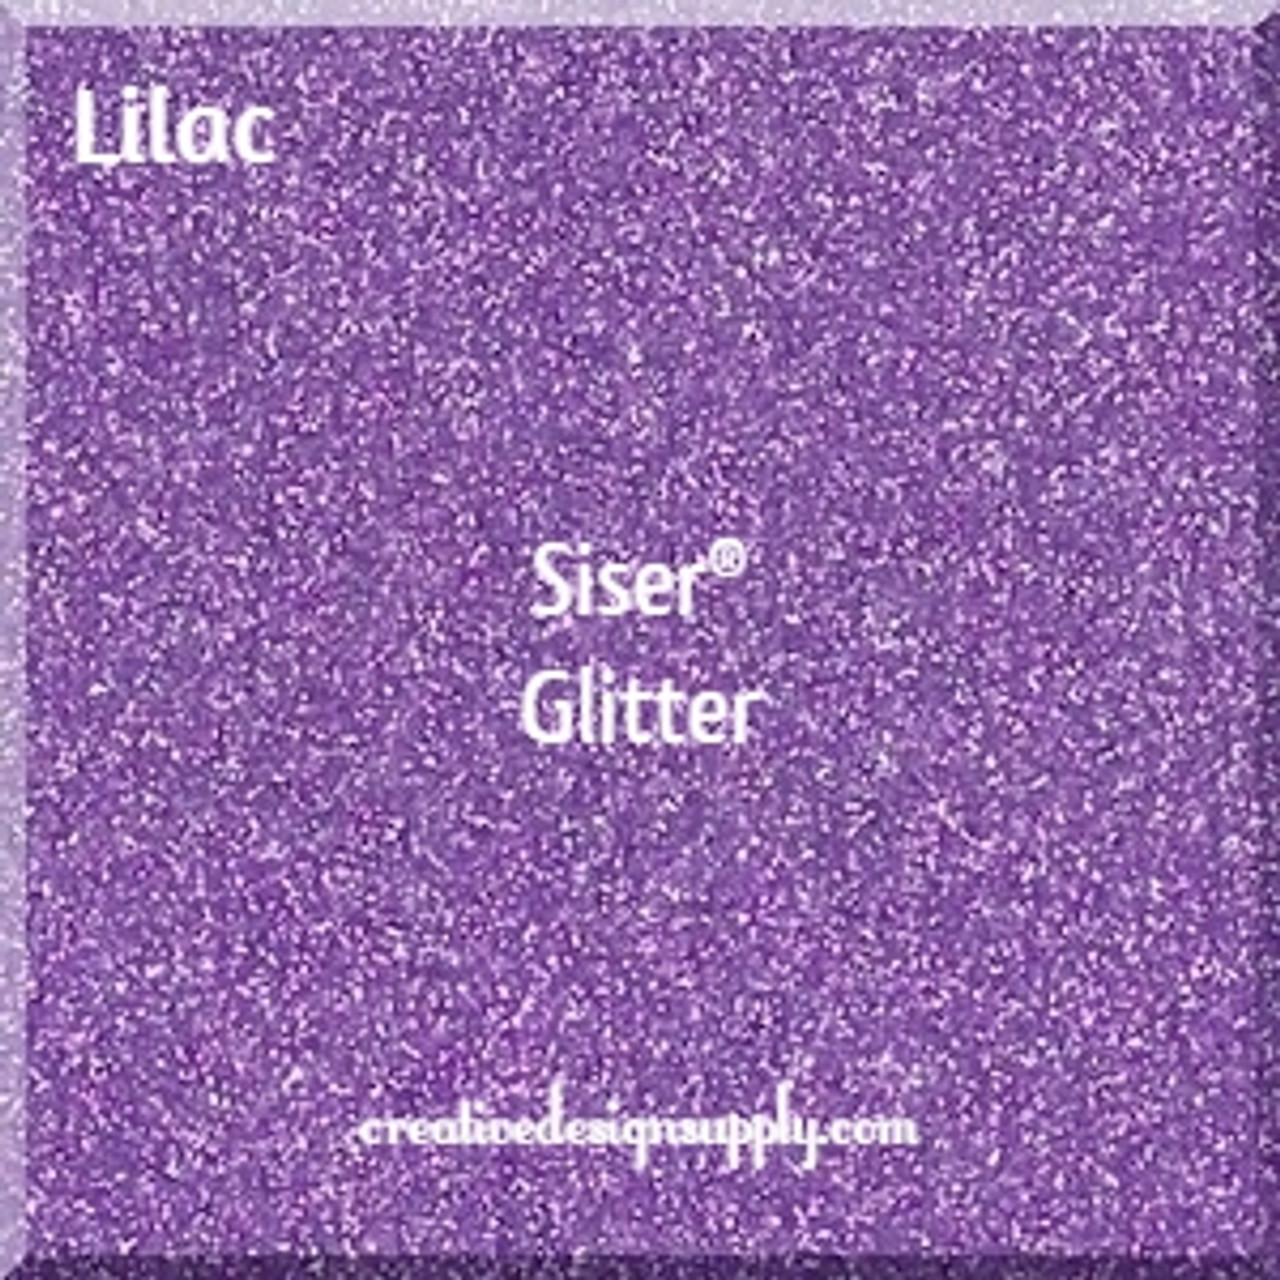 Siser Glitter HTV 20 x 12 Sheet - Iron on Heat Transfer Vinyl (Lilac)